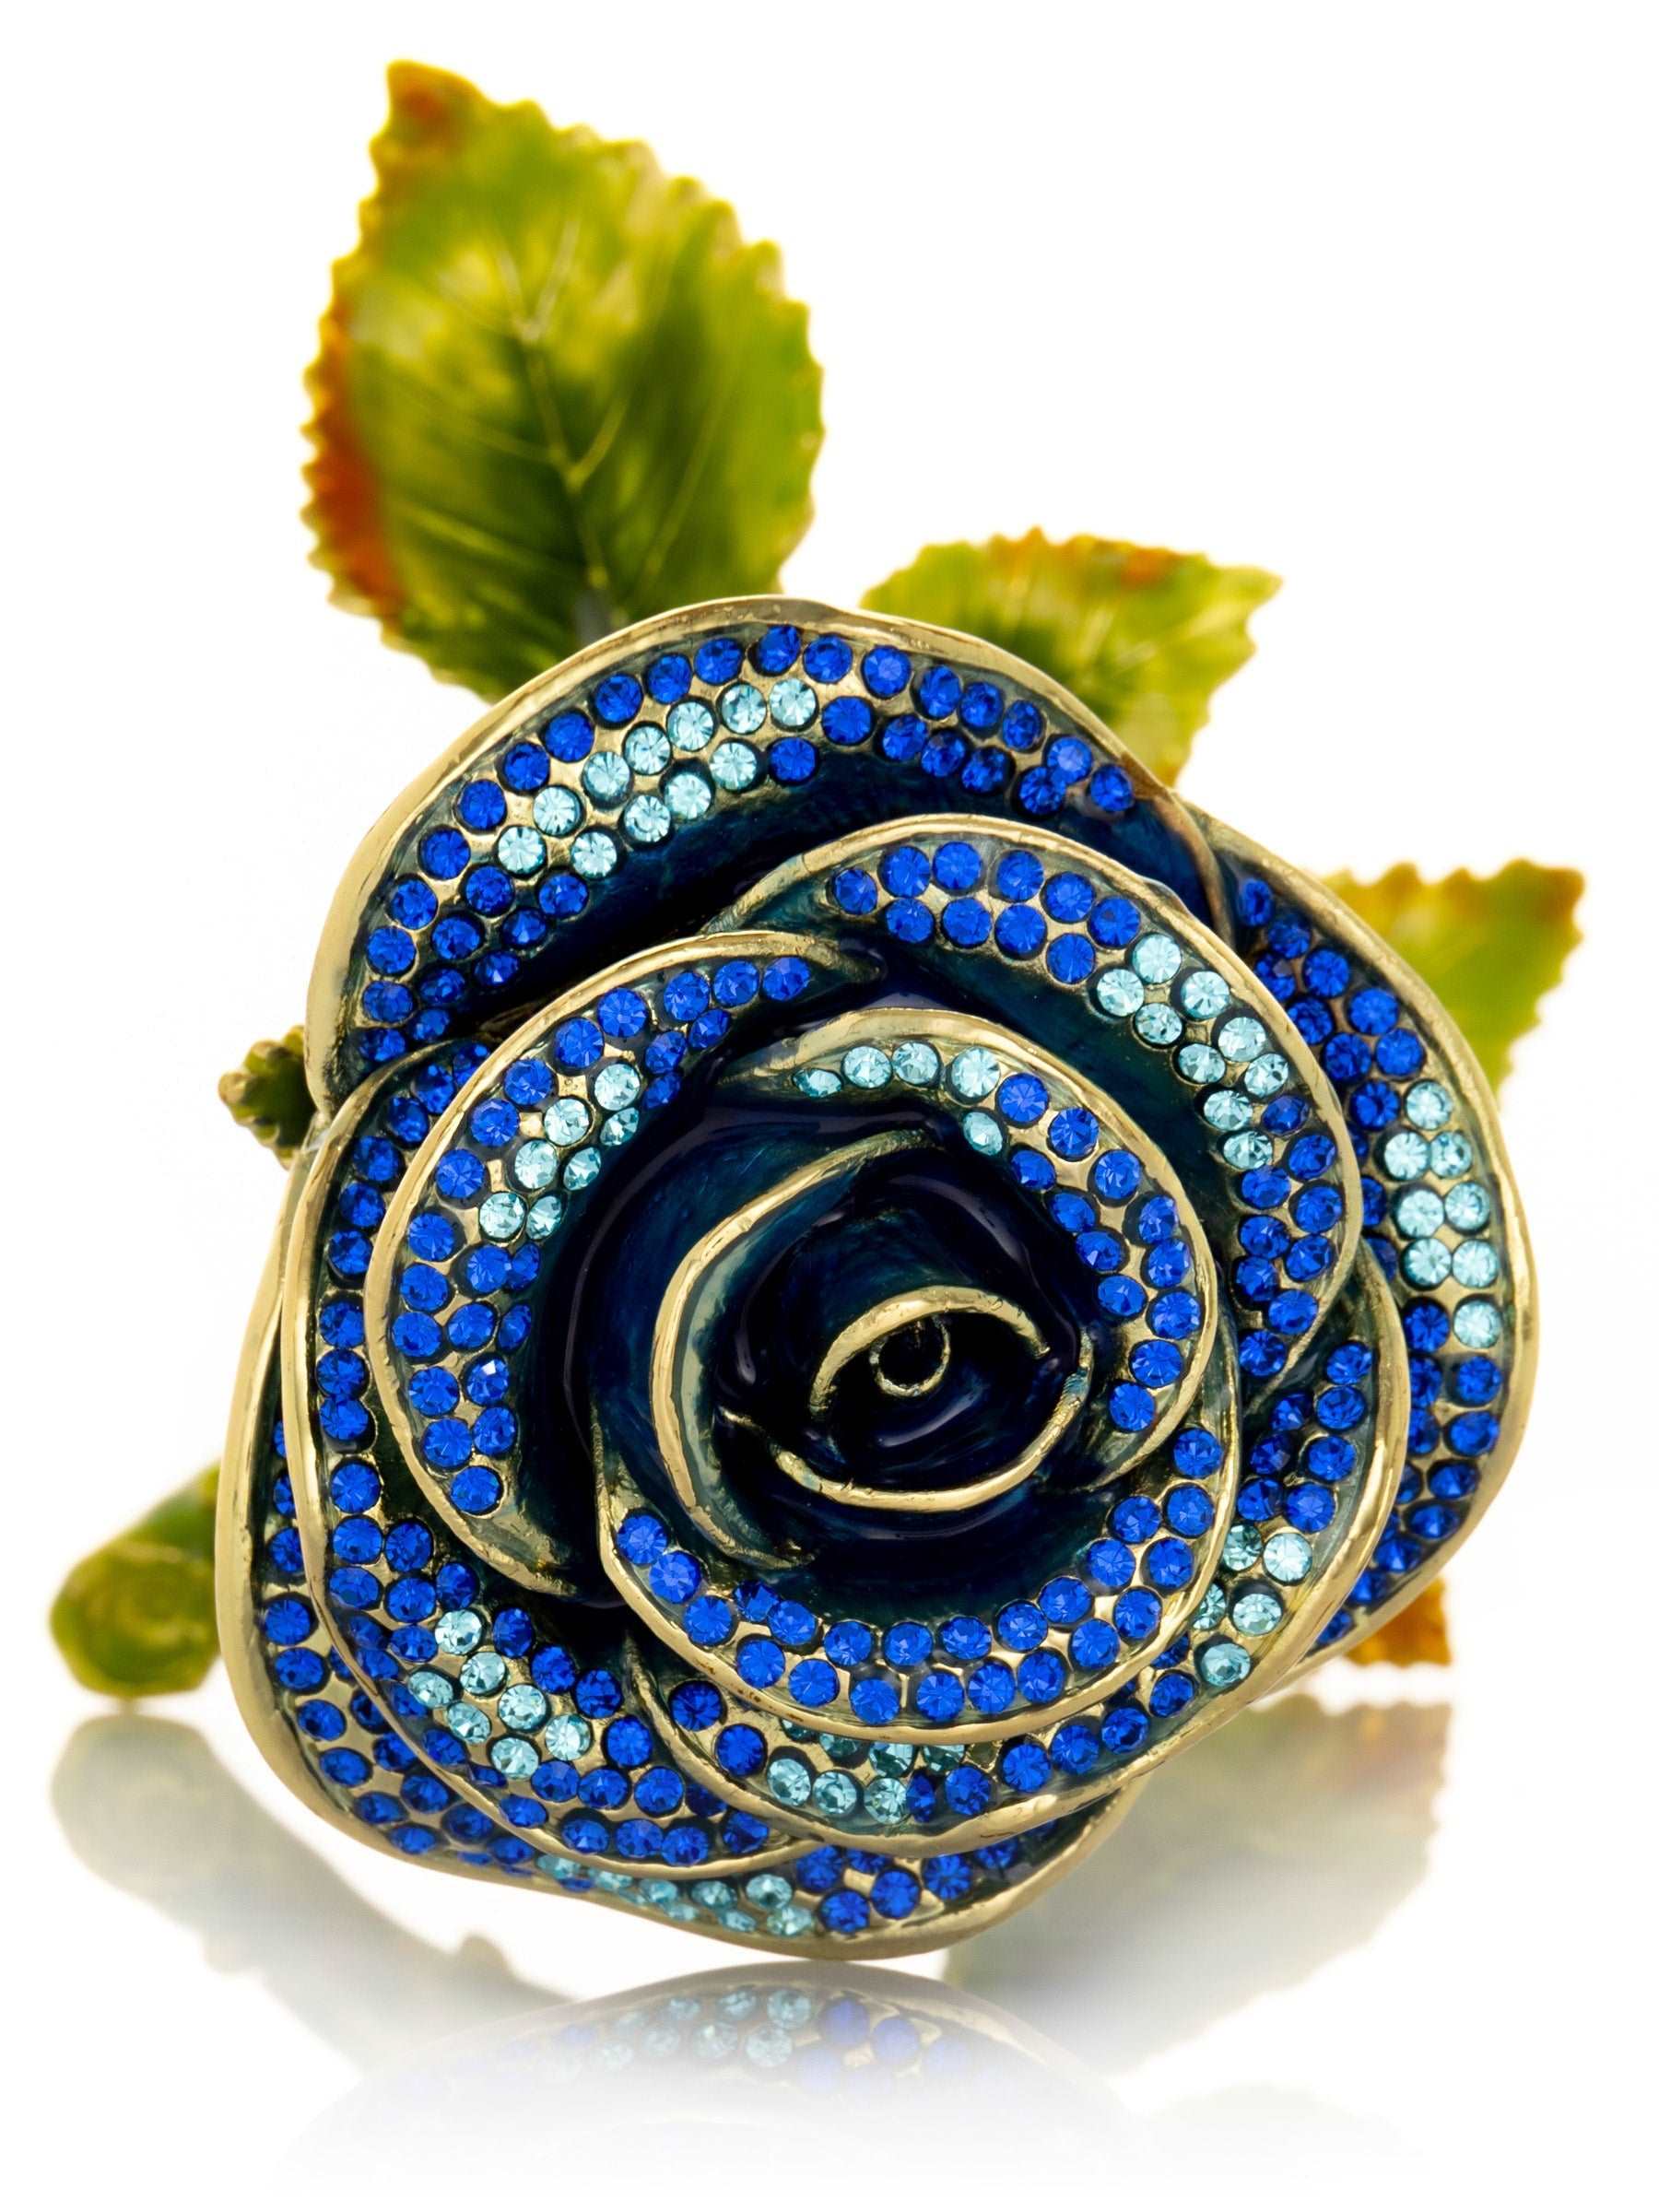 Personalized Trinket Boxes - Blue Rose Trinket Box 